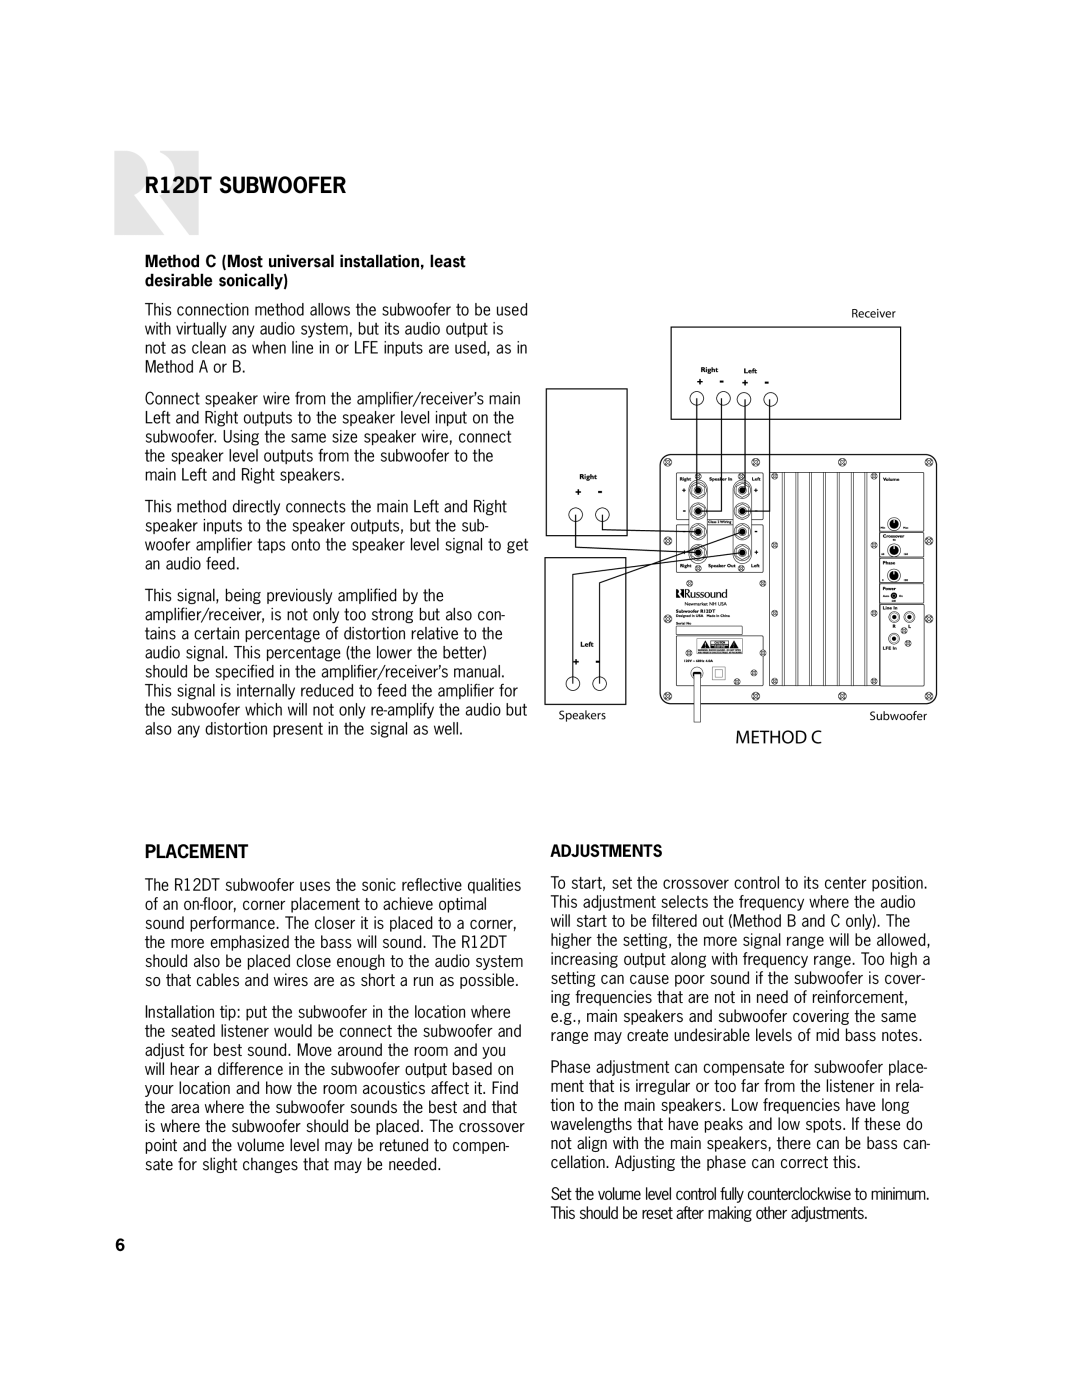 Russound user manual Placement, R12DT SUBWOOFER, Method C 